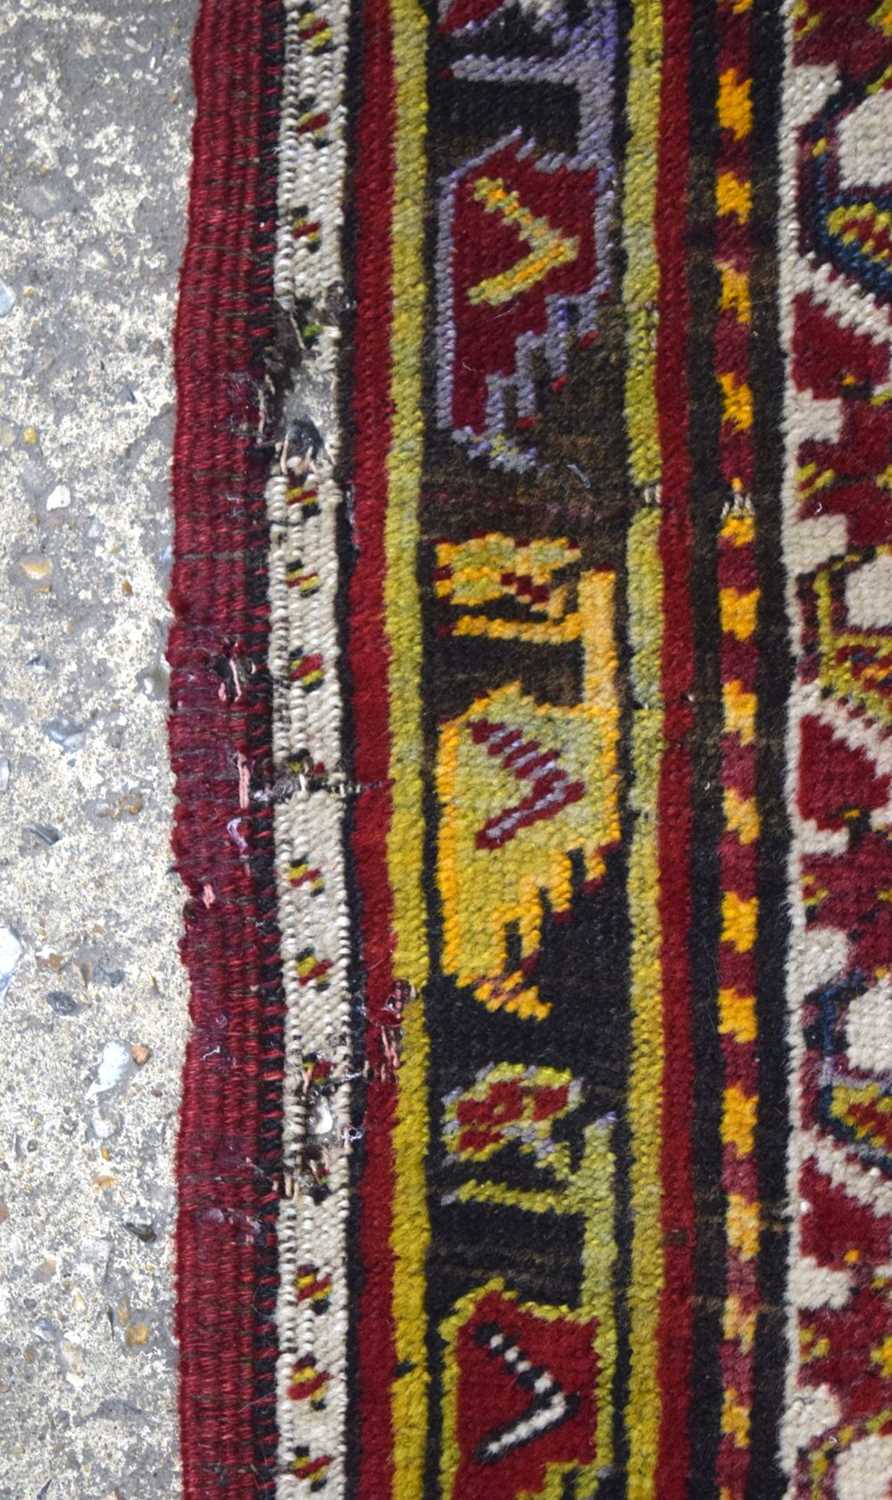 An Anatolian prayer rug 230 x 142 cm. - Image 11 of 20